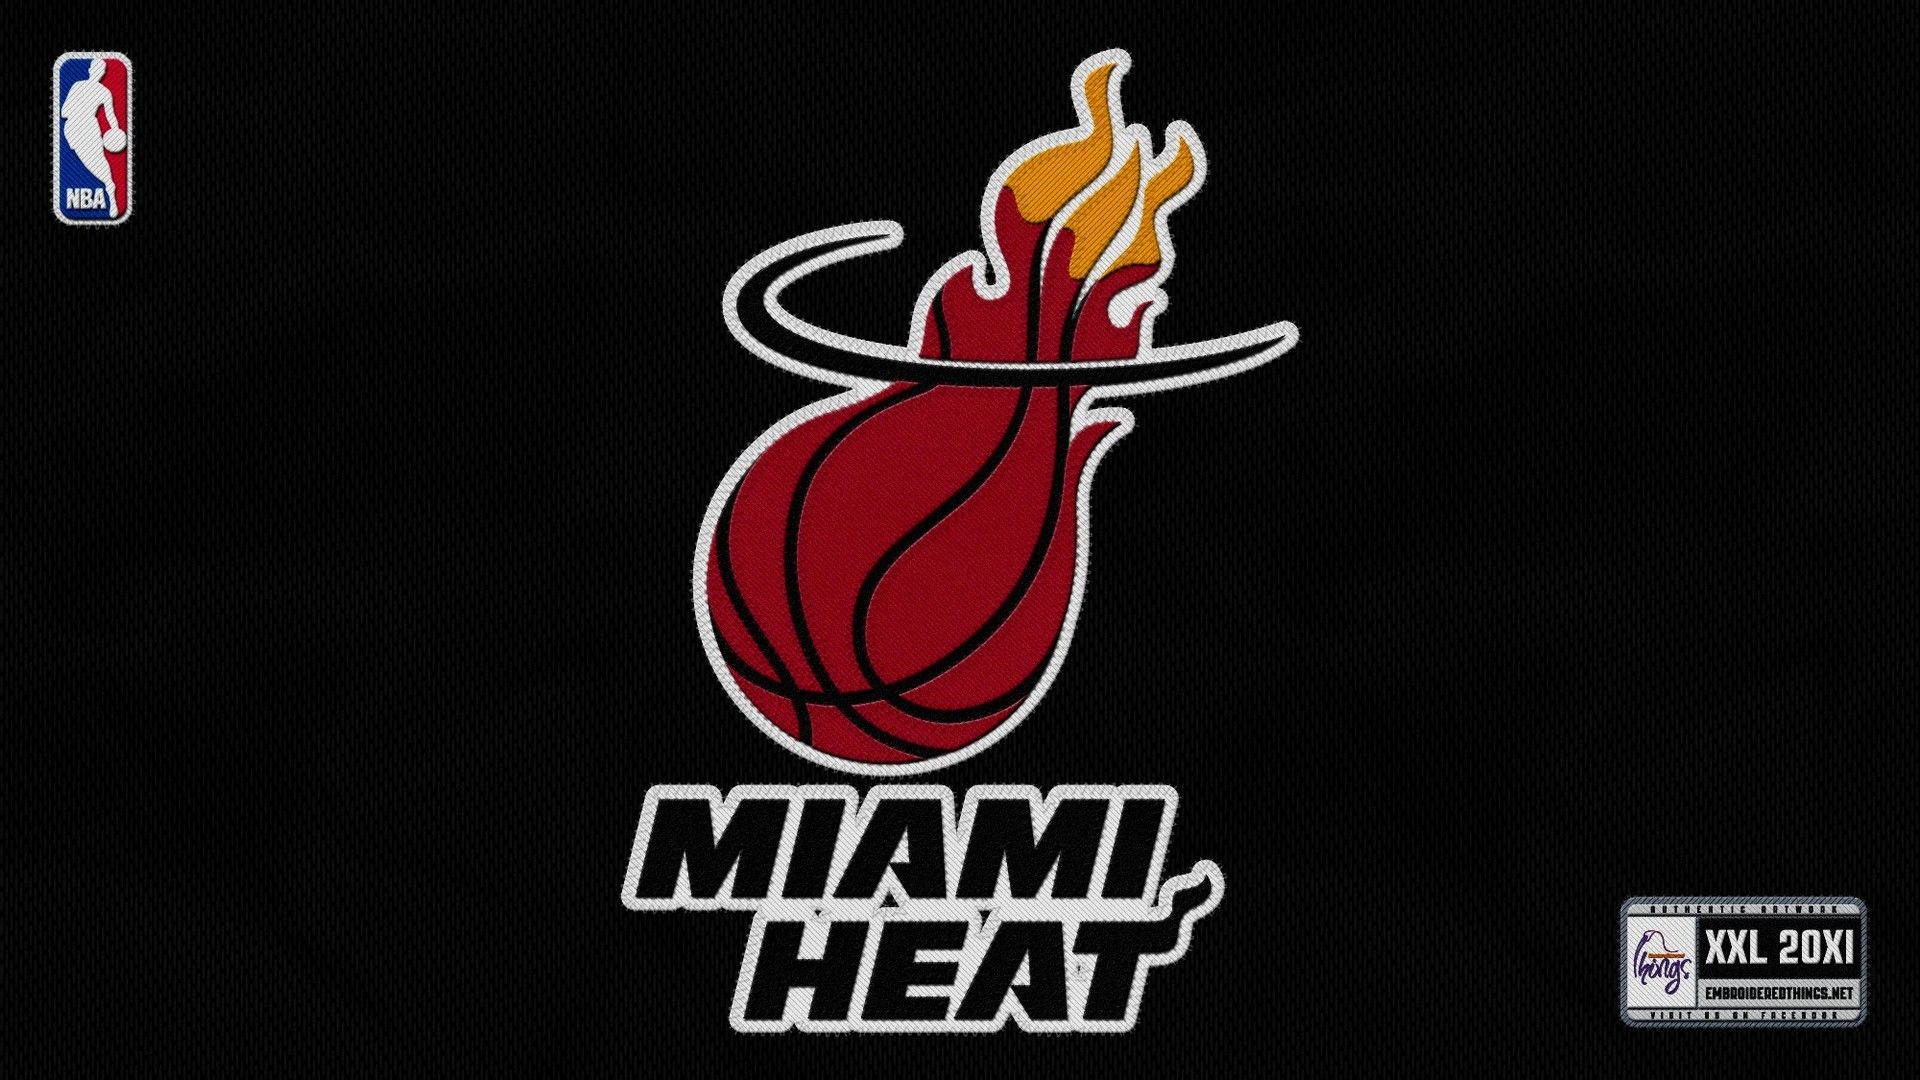 Windows Wallpaper Miami Heat Basketball Wallpaper. Miami heat, Basketball wallpaper, Miami heat logo